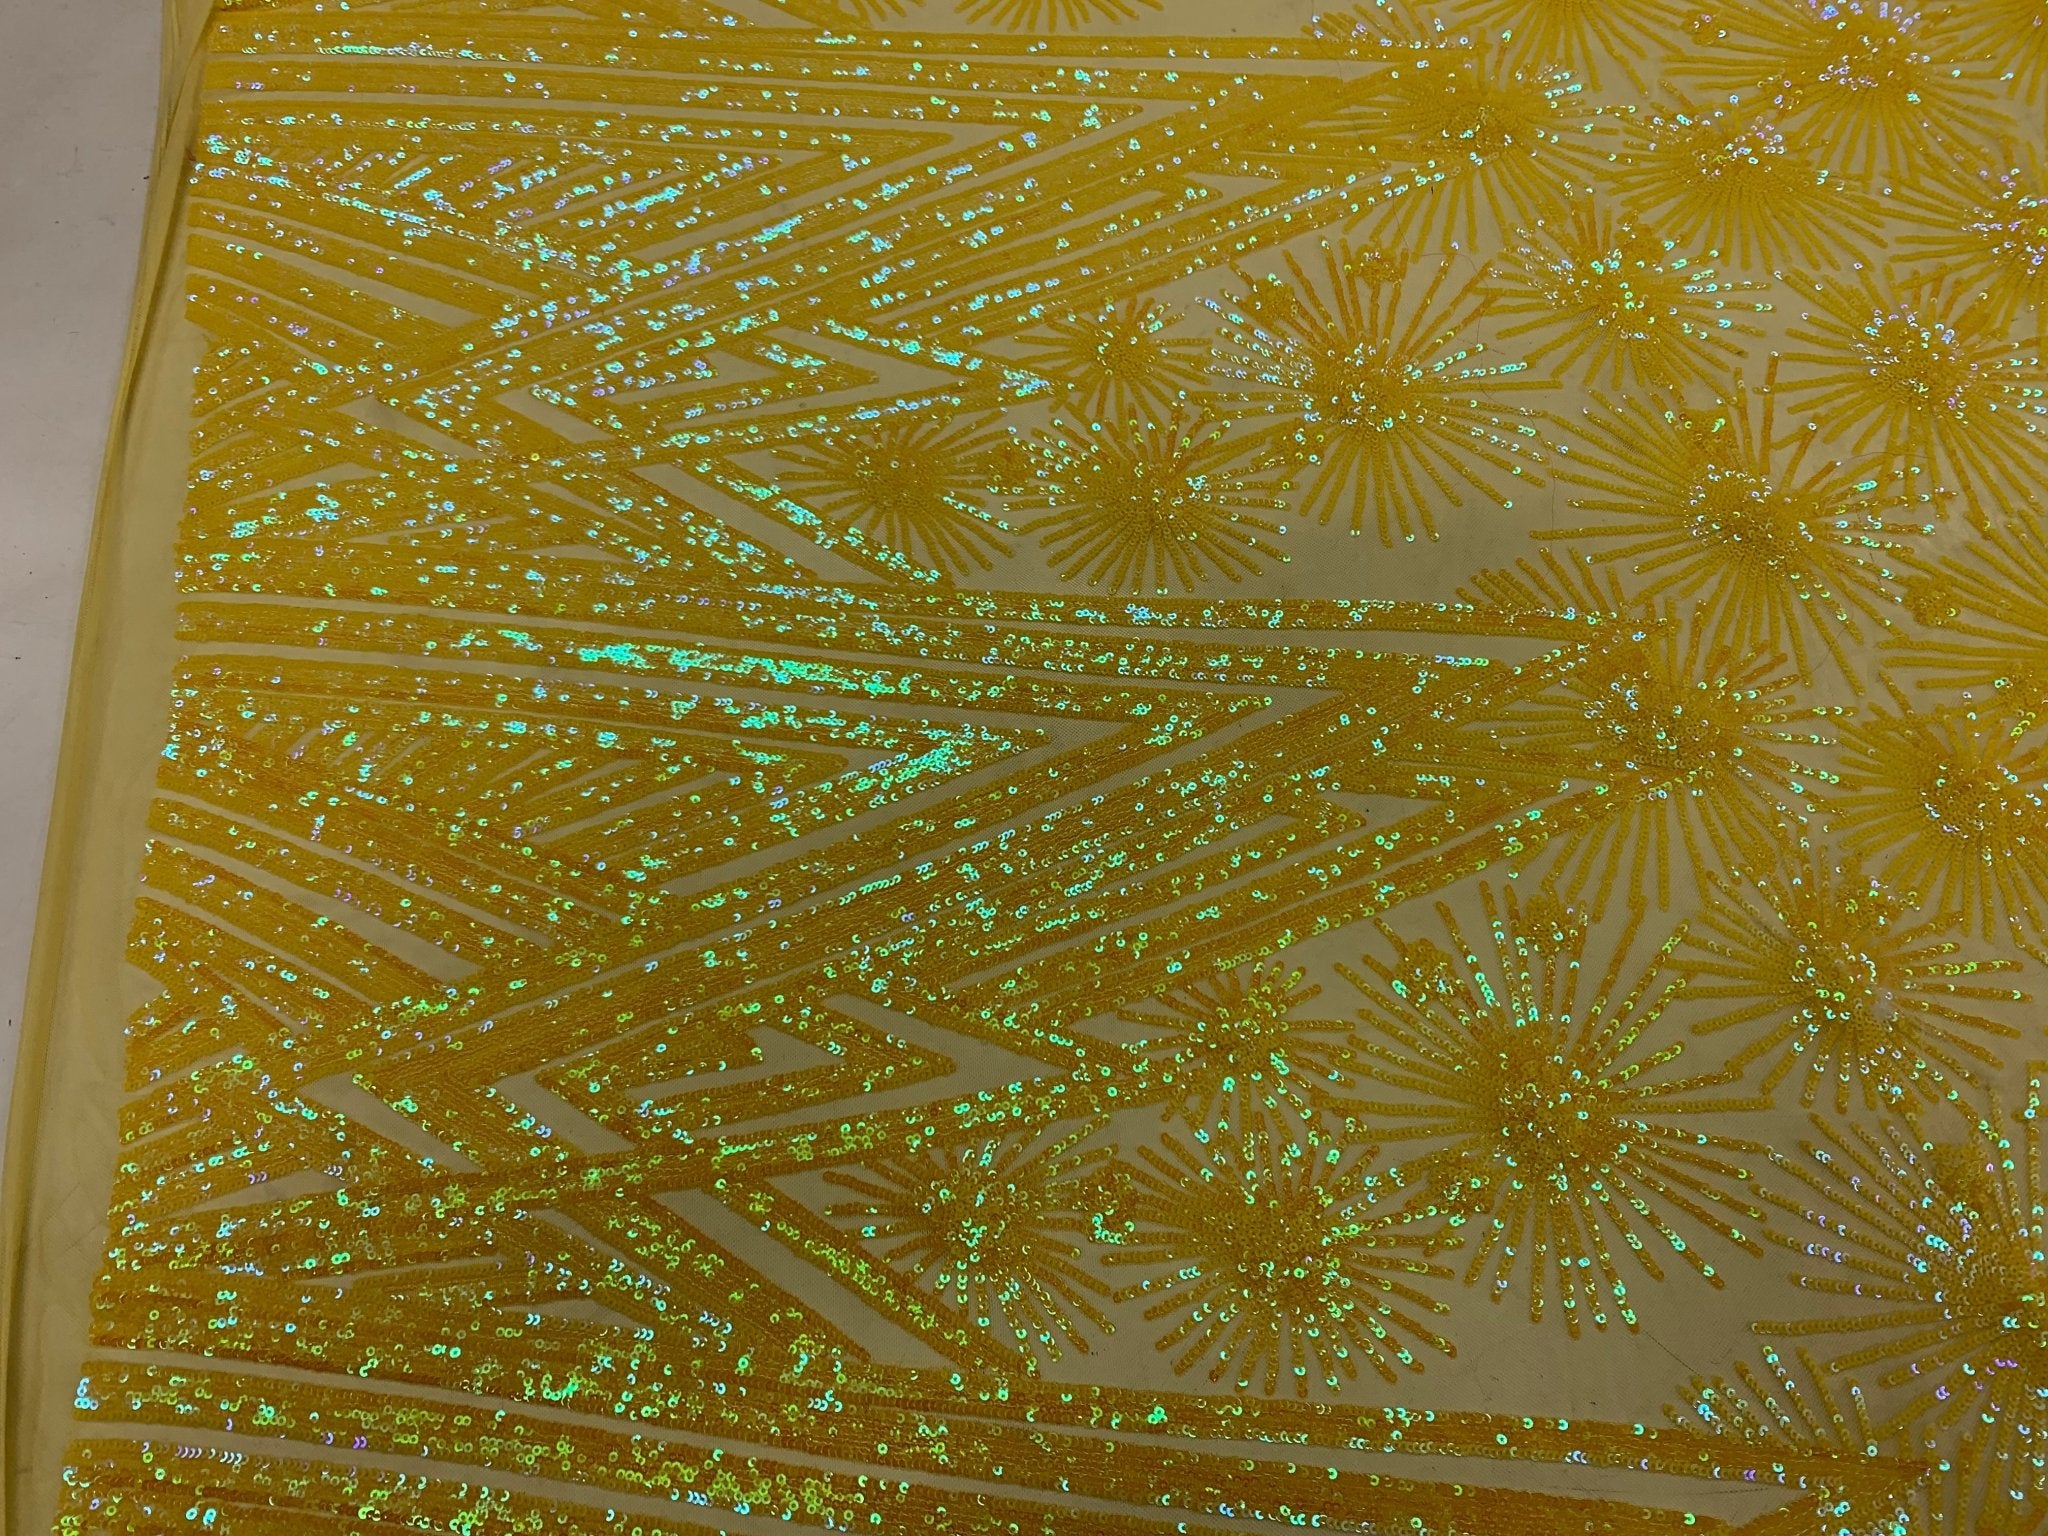 4 Way Stretch Iridescent Geometric Sequin Embroidered Mesh Lace FabricICEFABRICICE FABRICSYellow IridescentBy The Yard (58" Wide)4 Way Stretch Iridescent Geometric Sequin Embroidered Mesh Lace Fabric ICEFABRIC |Yellow Iridescent